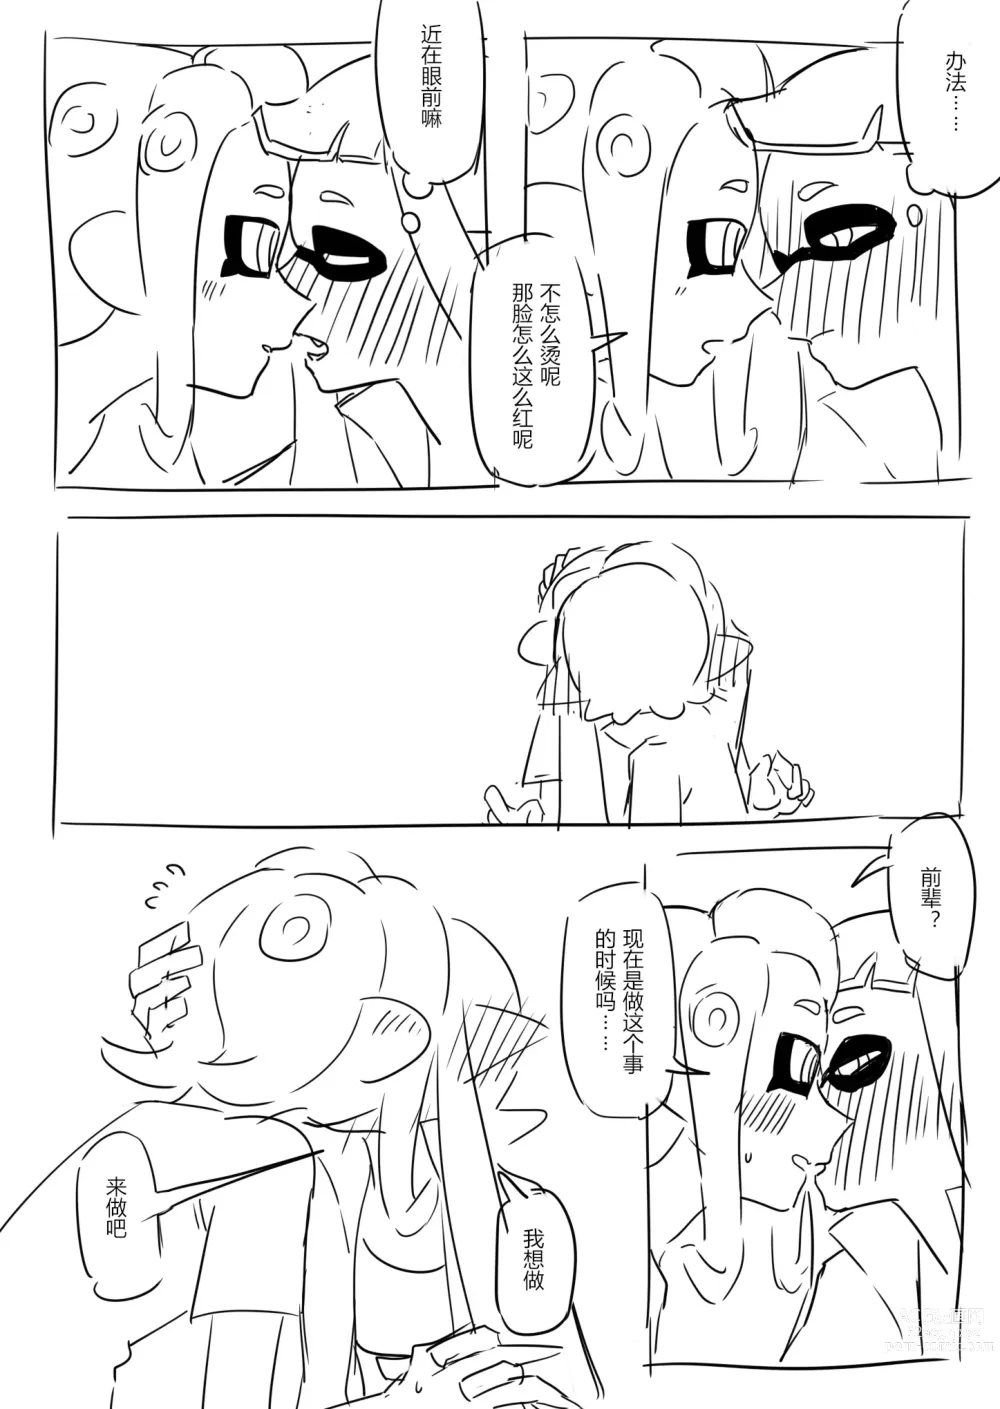 Page 8 of doujinshi 想不出标题了